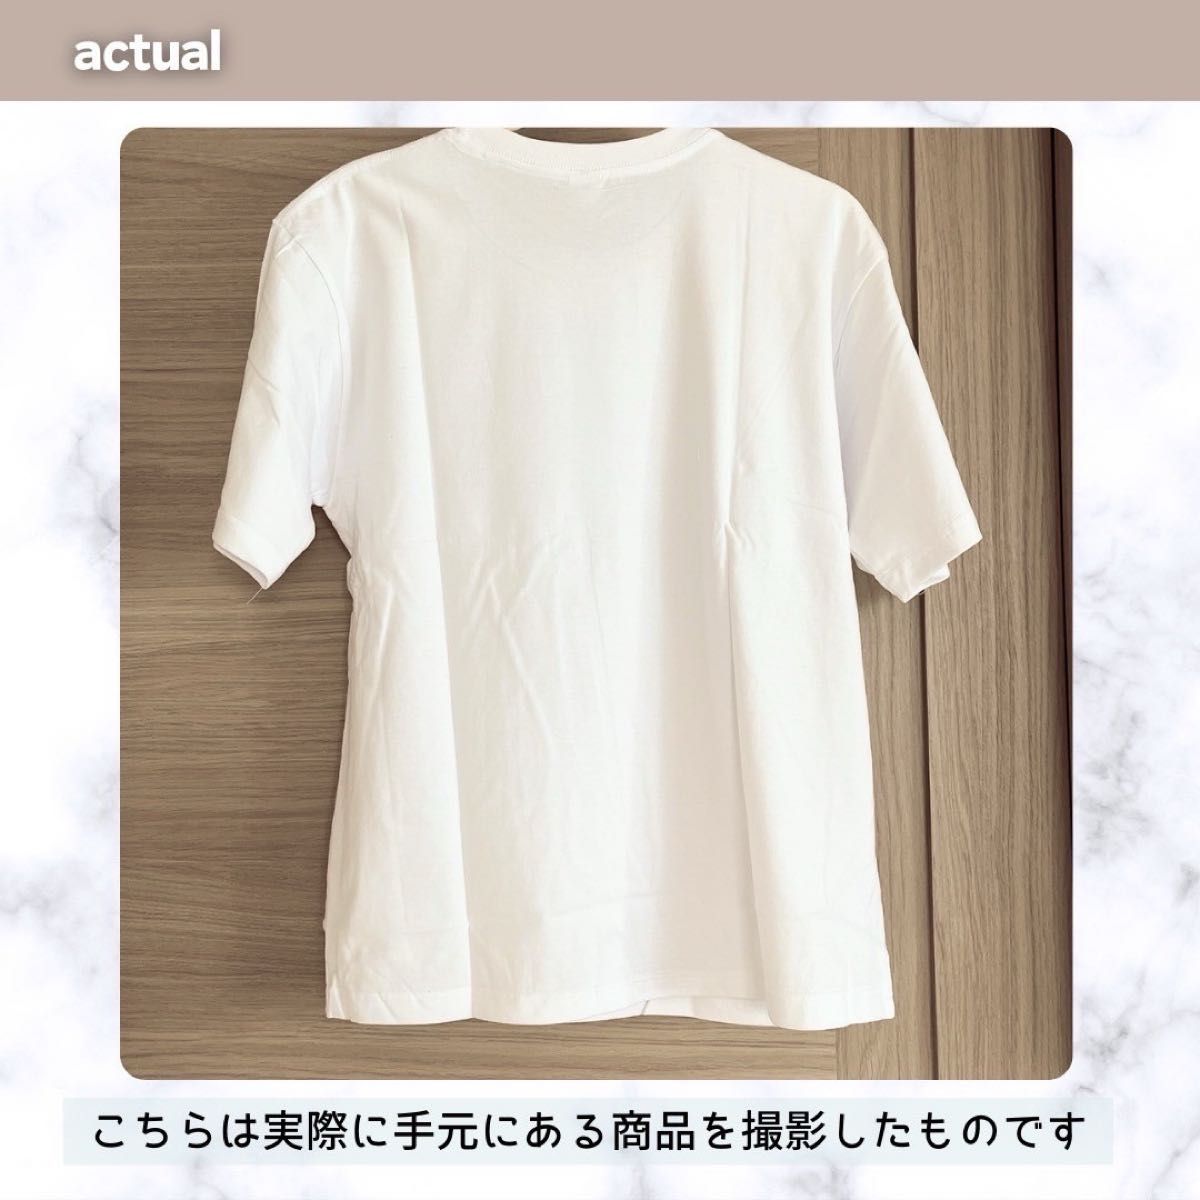 【SALE】 オーバーサイズ Tシャツ 半袖 ビッグシルエット カジュアル 体型カバー ホワイト 白 プリント 綿 3L XXL